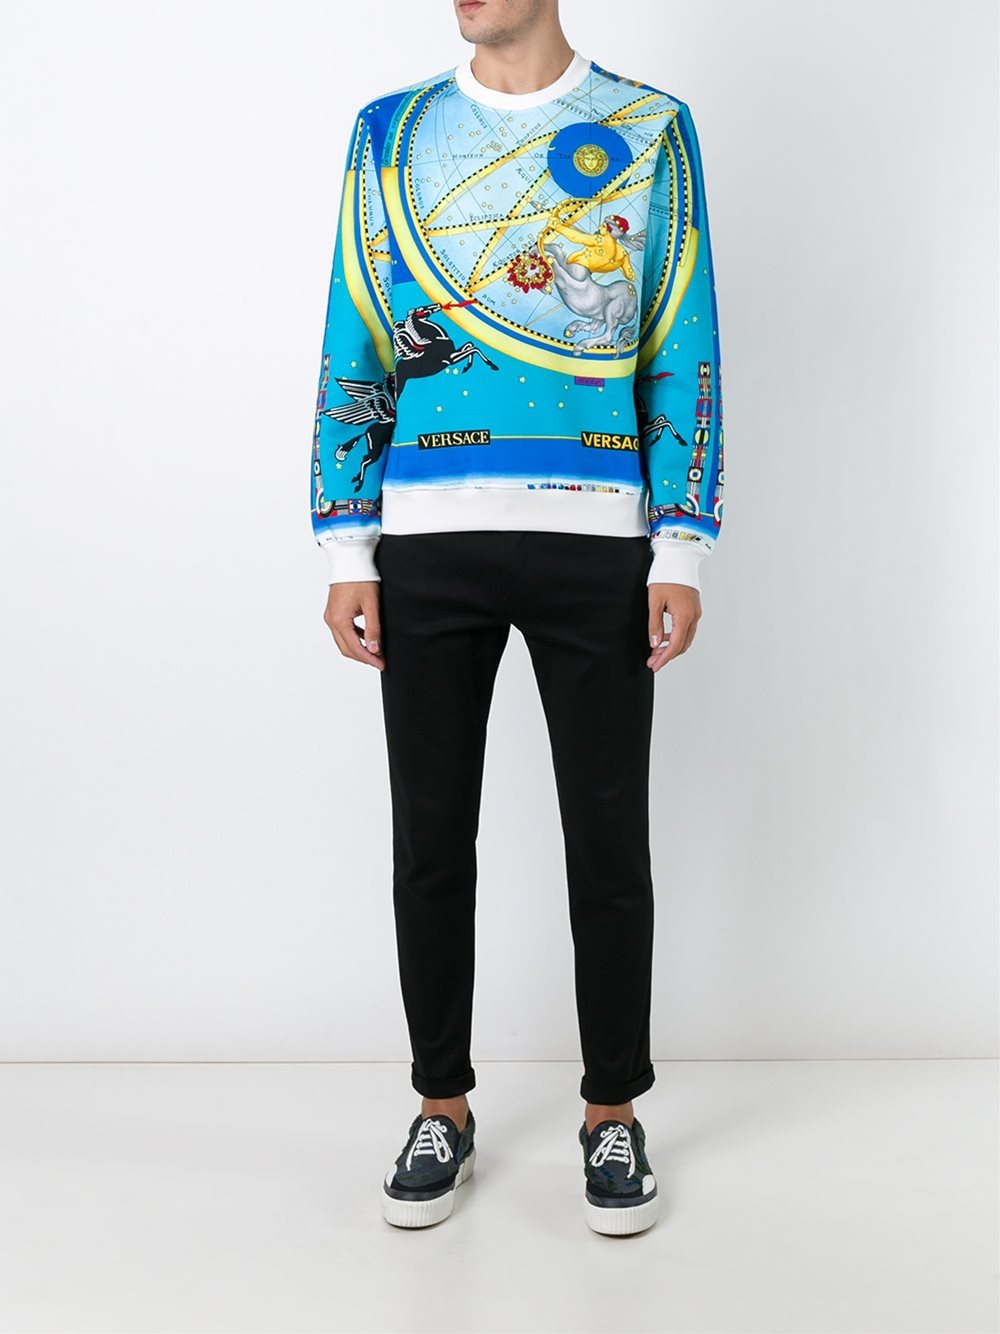 Versace Cotton 'horoscope' Sweatshirt in Blue for Men - Lyst